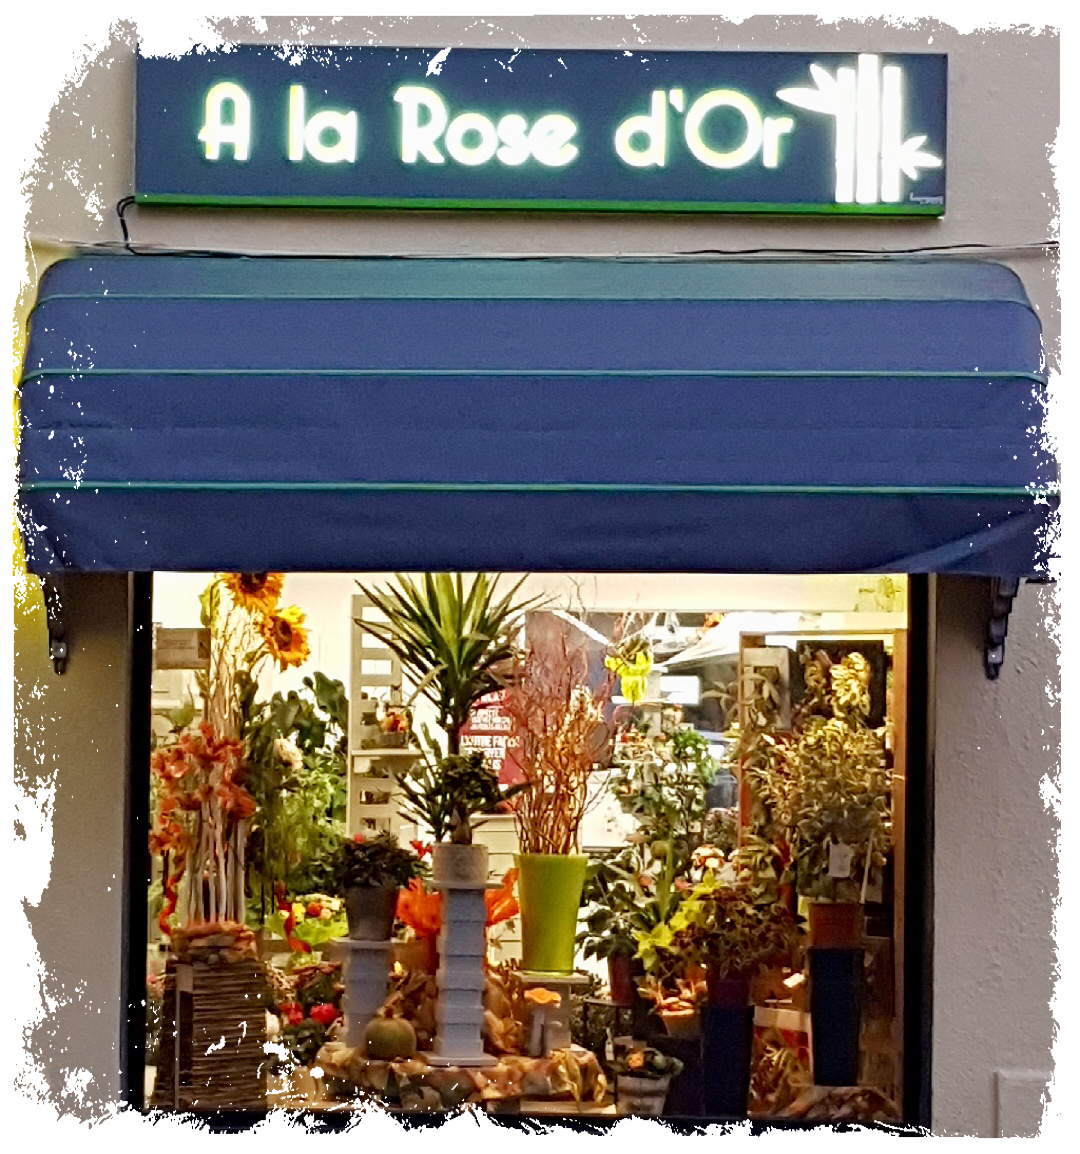 A La Rose d'Or